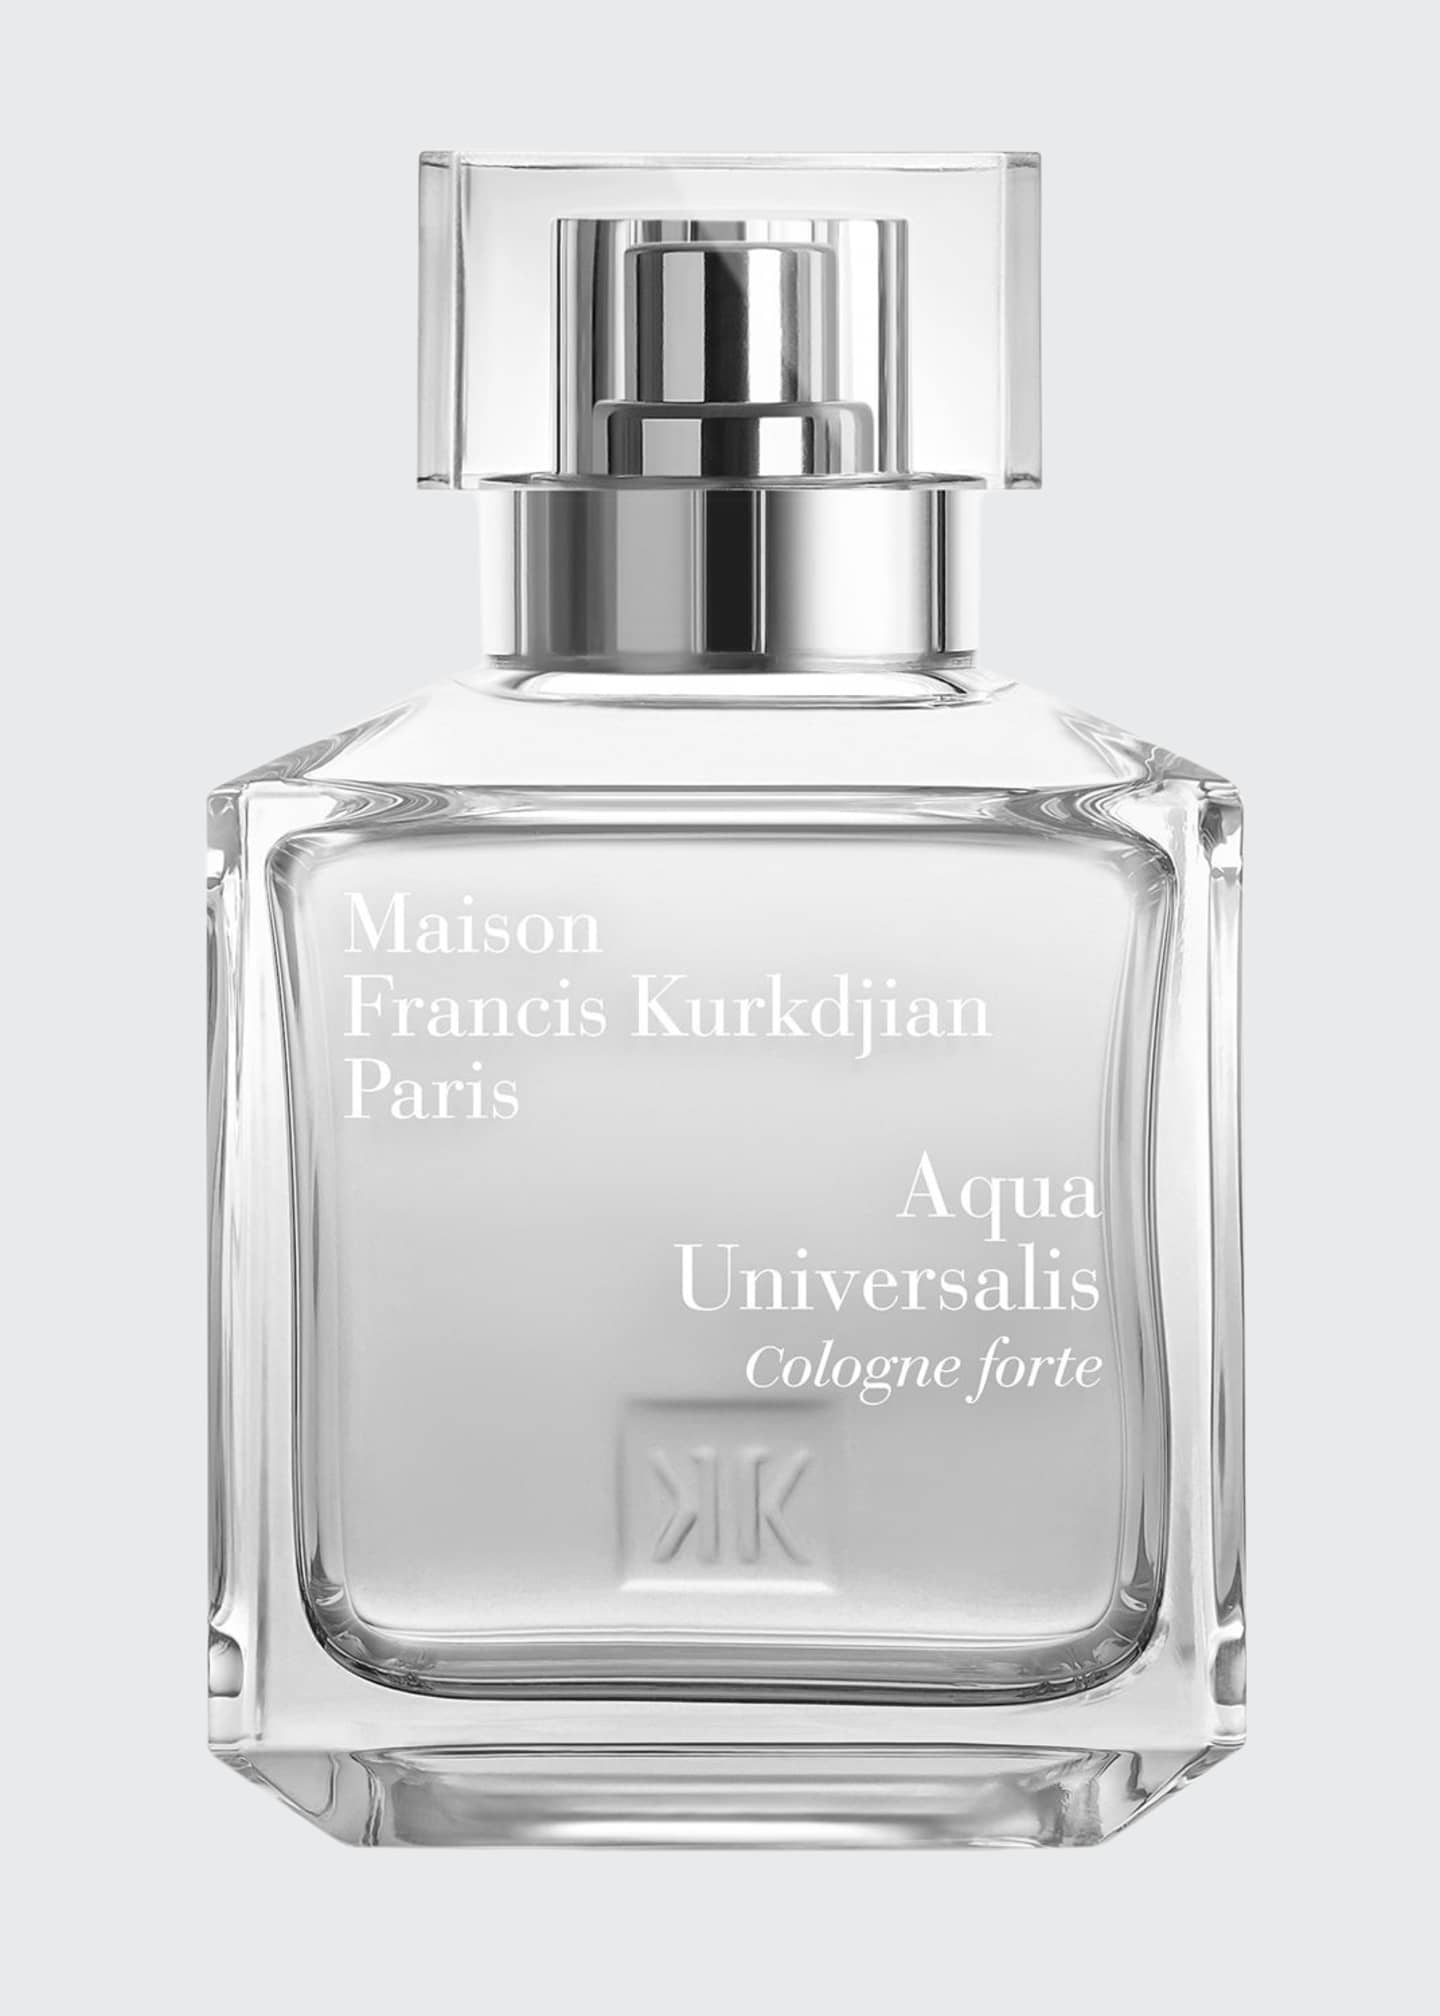 Maison Francis Kurkdjian Aqua Universalis Cologne Forte Eau de Parfum, 2.4 oz. Image 1 of 3